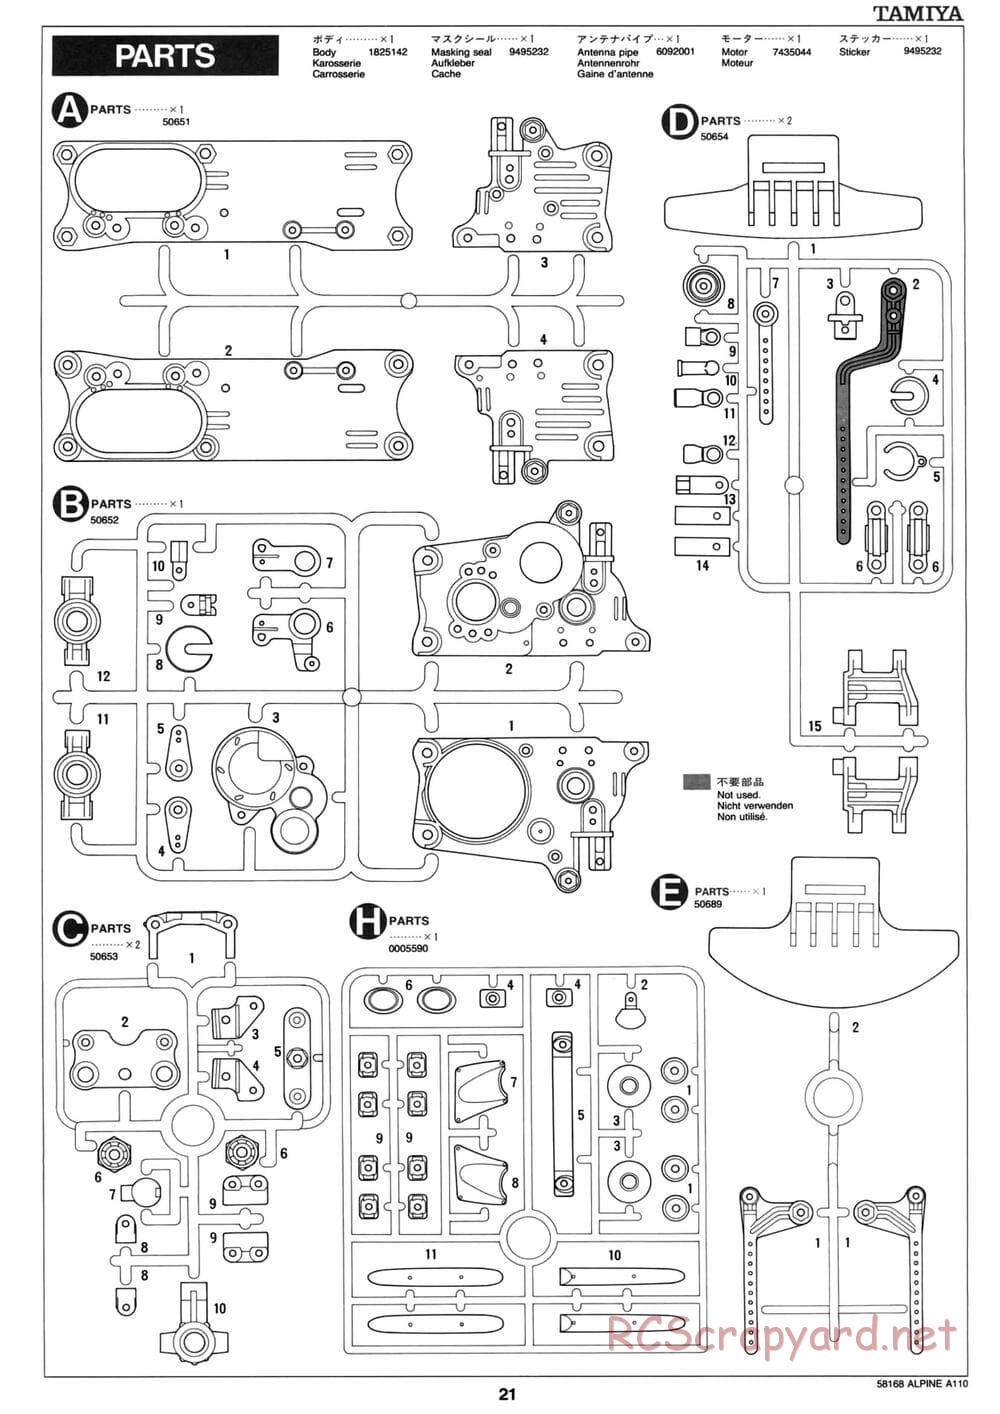 Tamiya - Alpine A110 - M02 Chassis - Manual - Page 21